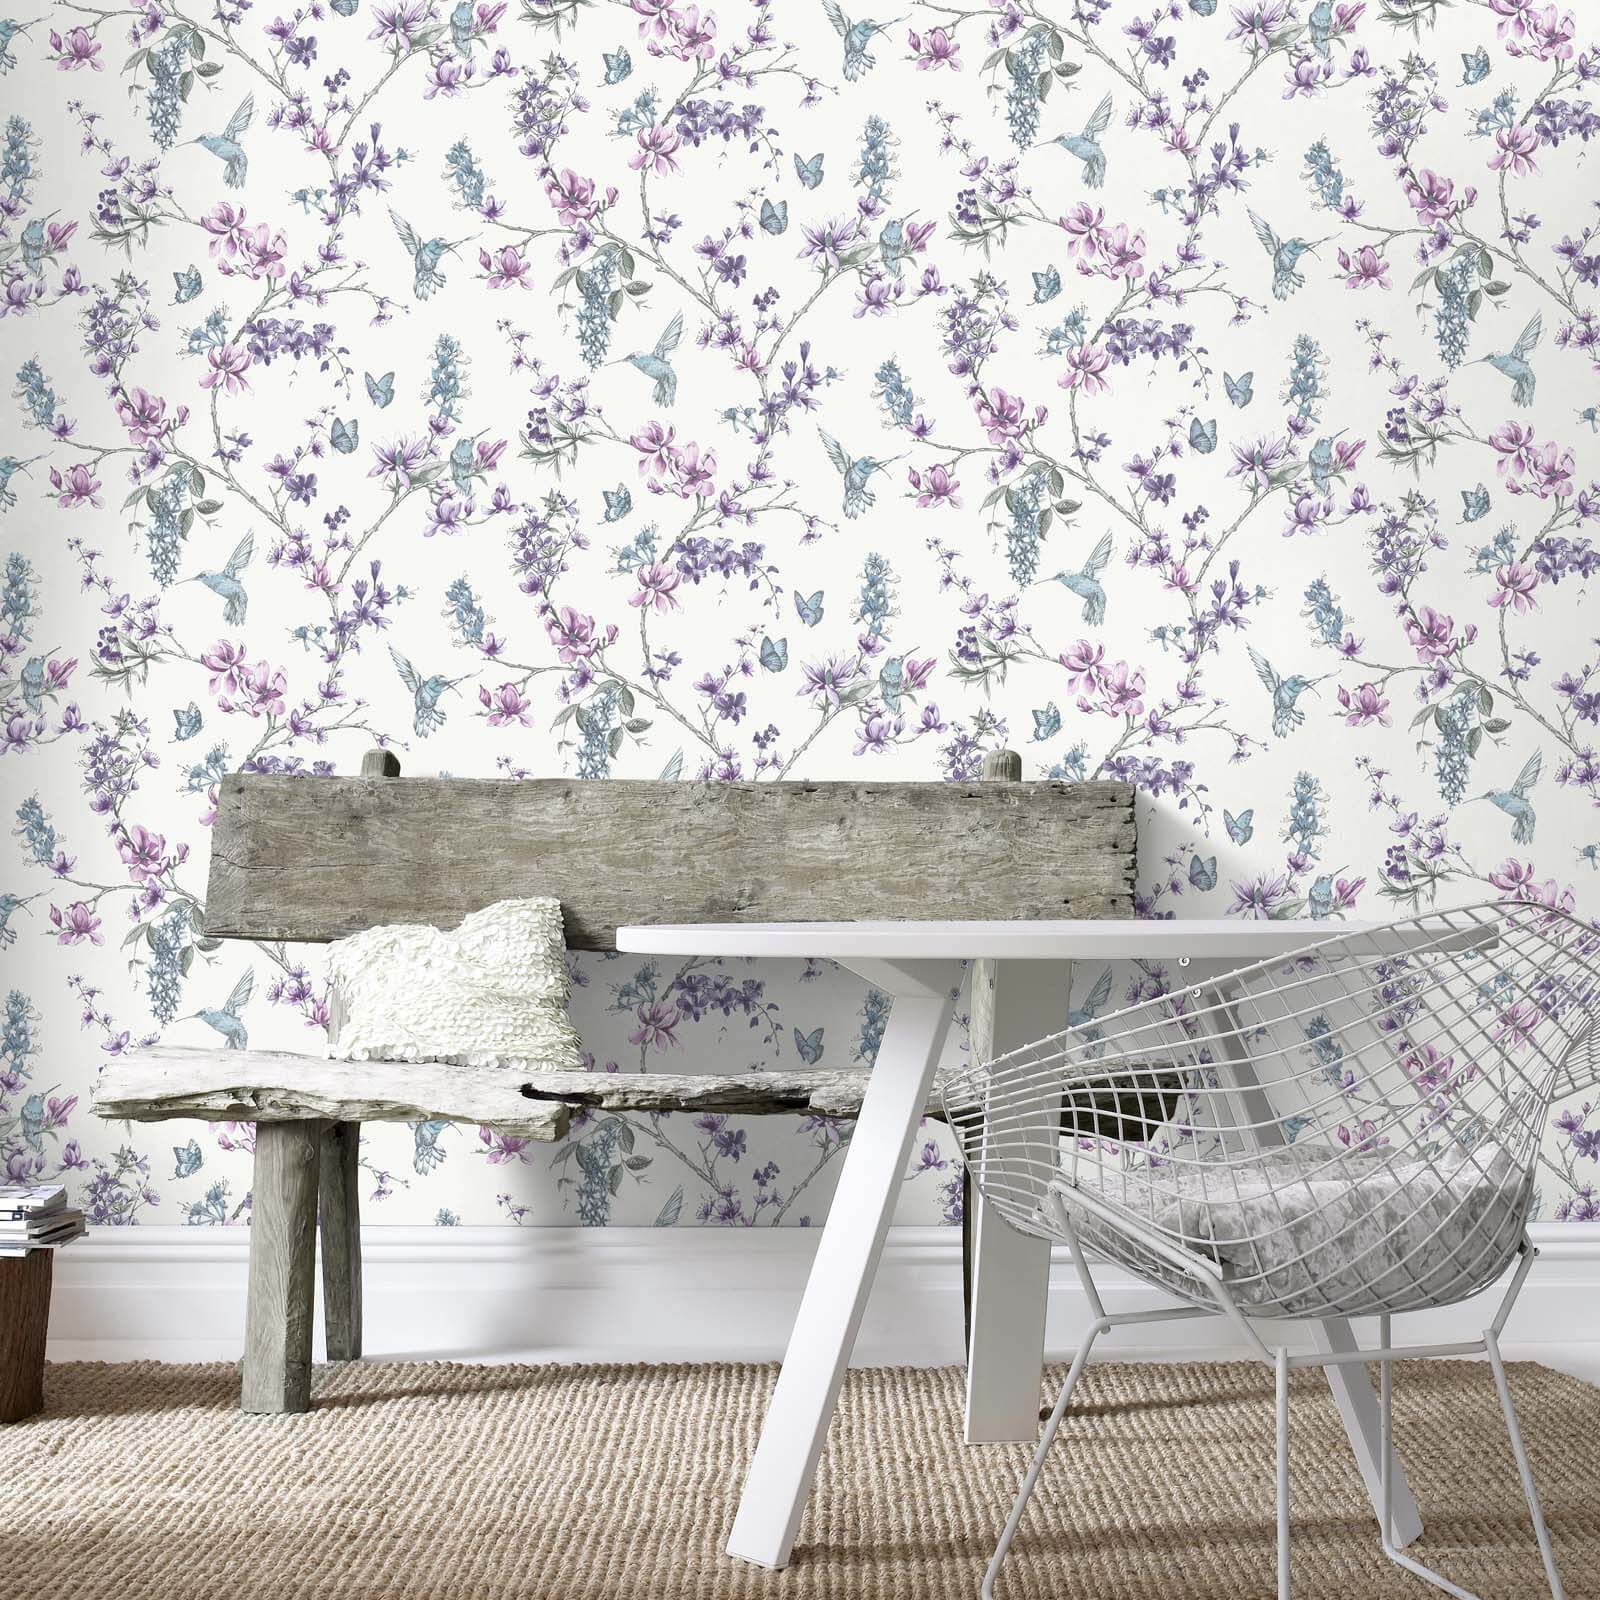 Superfresco Easy Paste the Wall Hummingbird Floral Purple Wallpaper